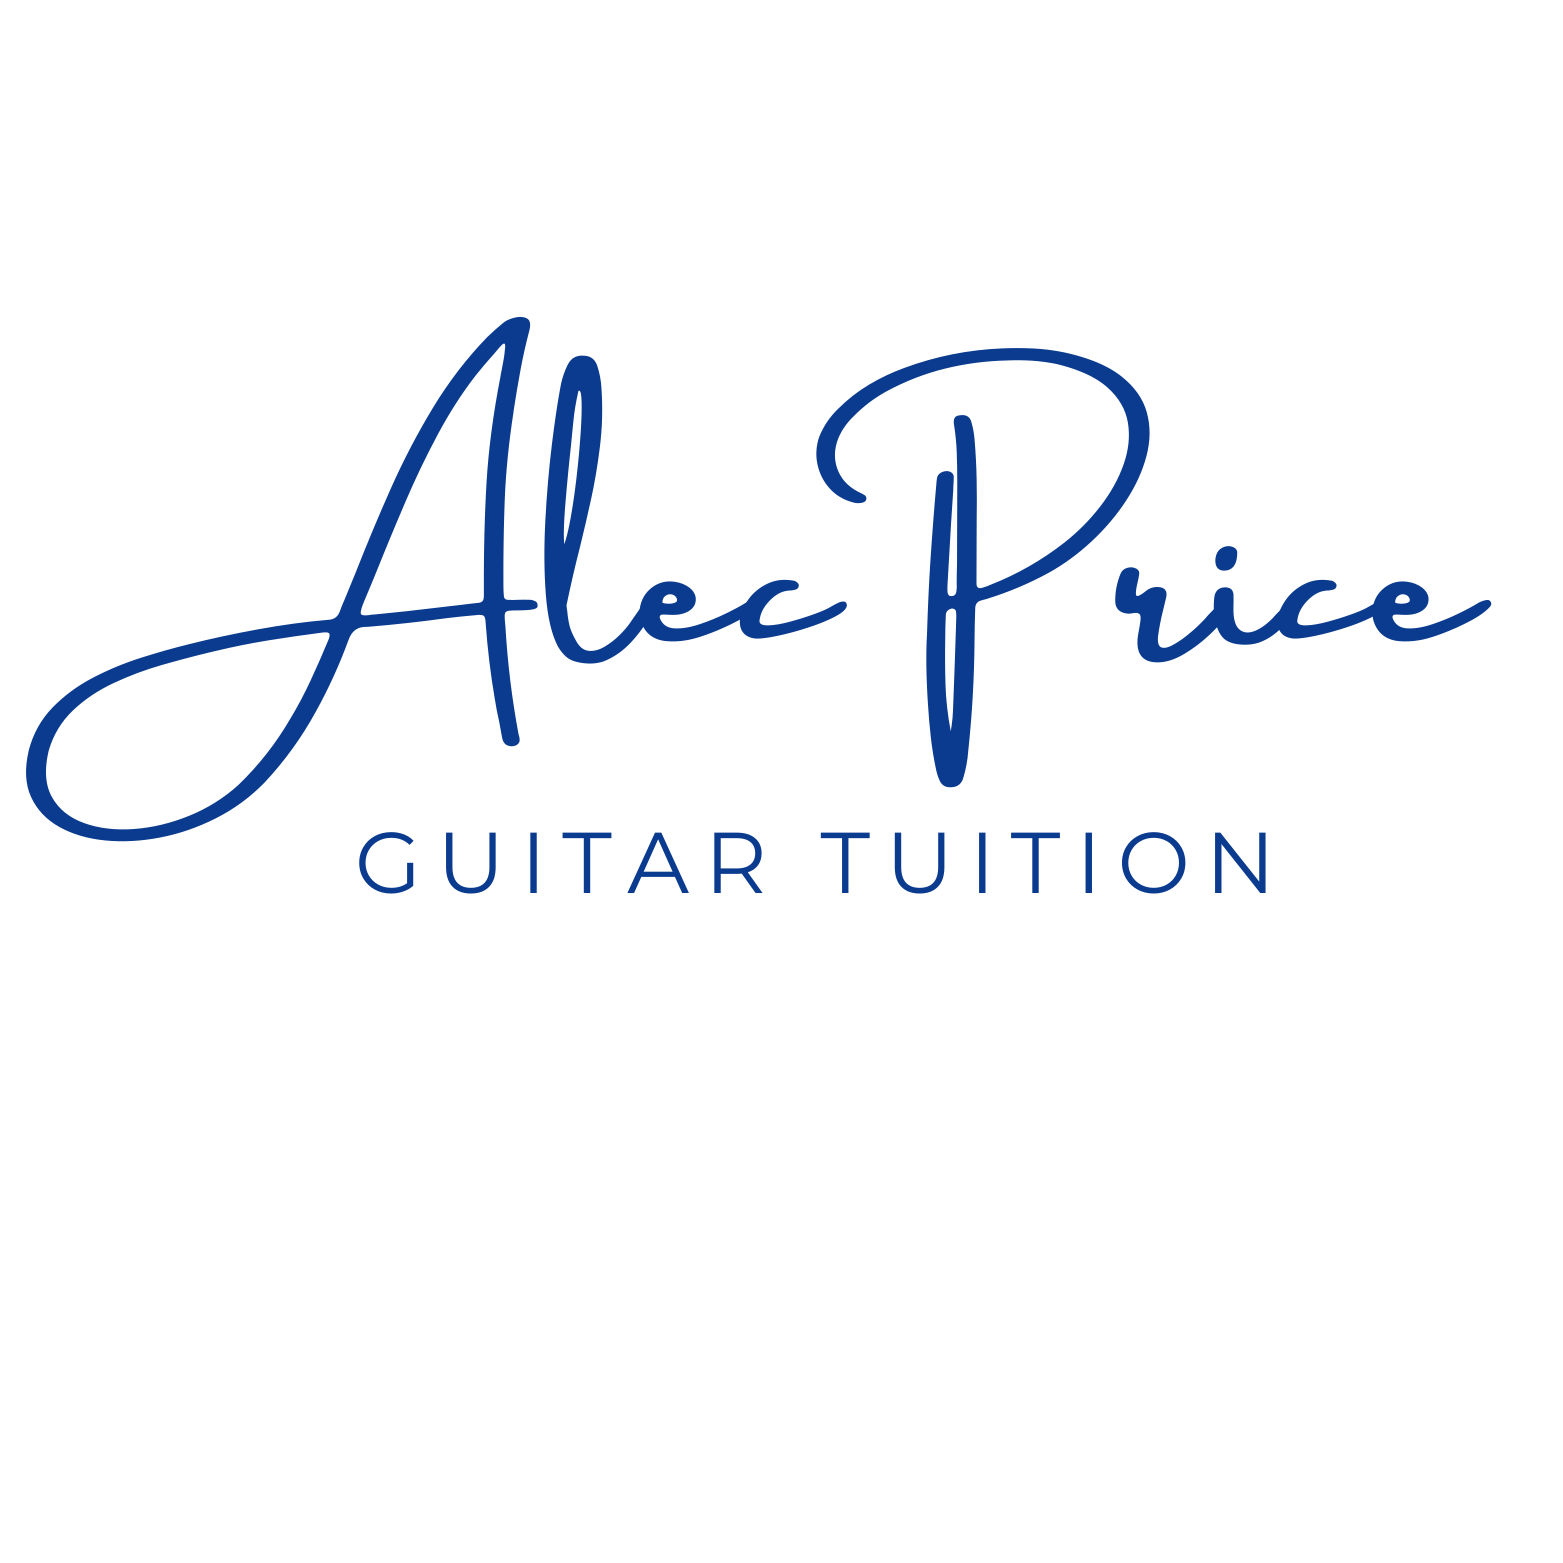 Alec Price Guitar Tuition logo